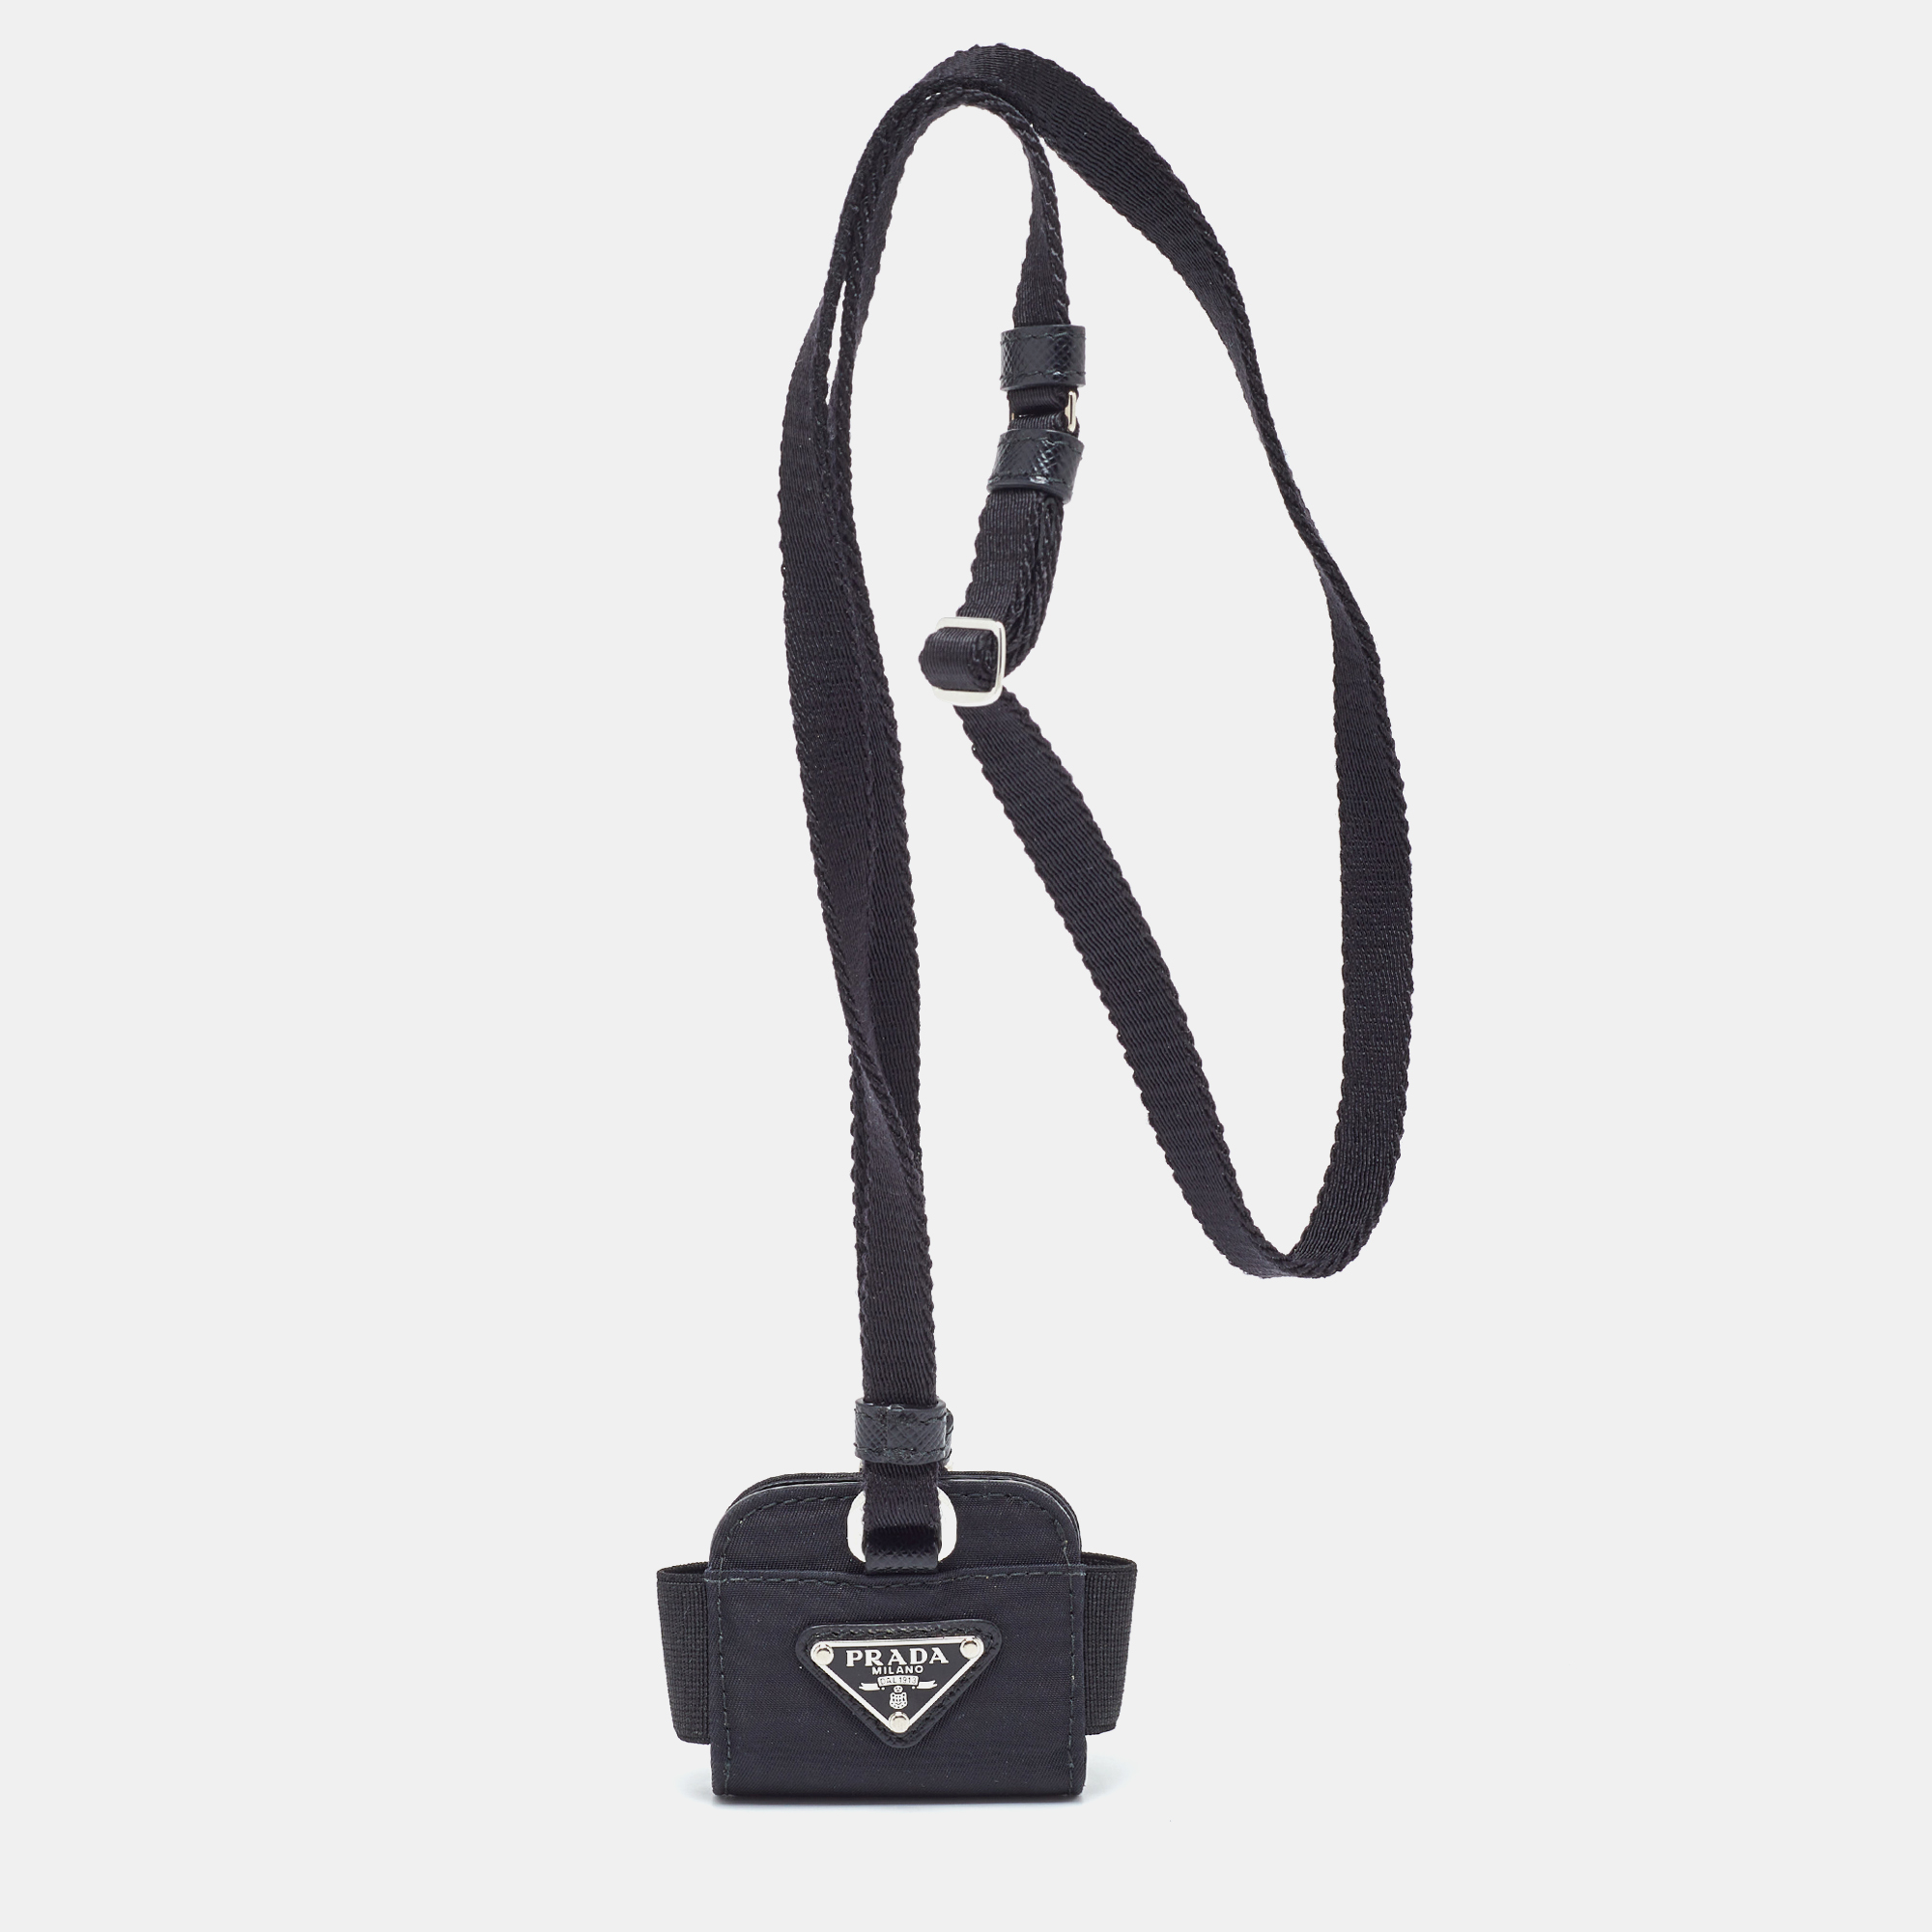 Prada black nylon airpods pro case with adjustable strap